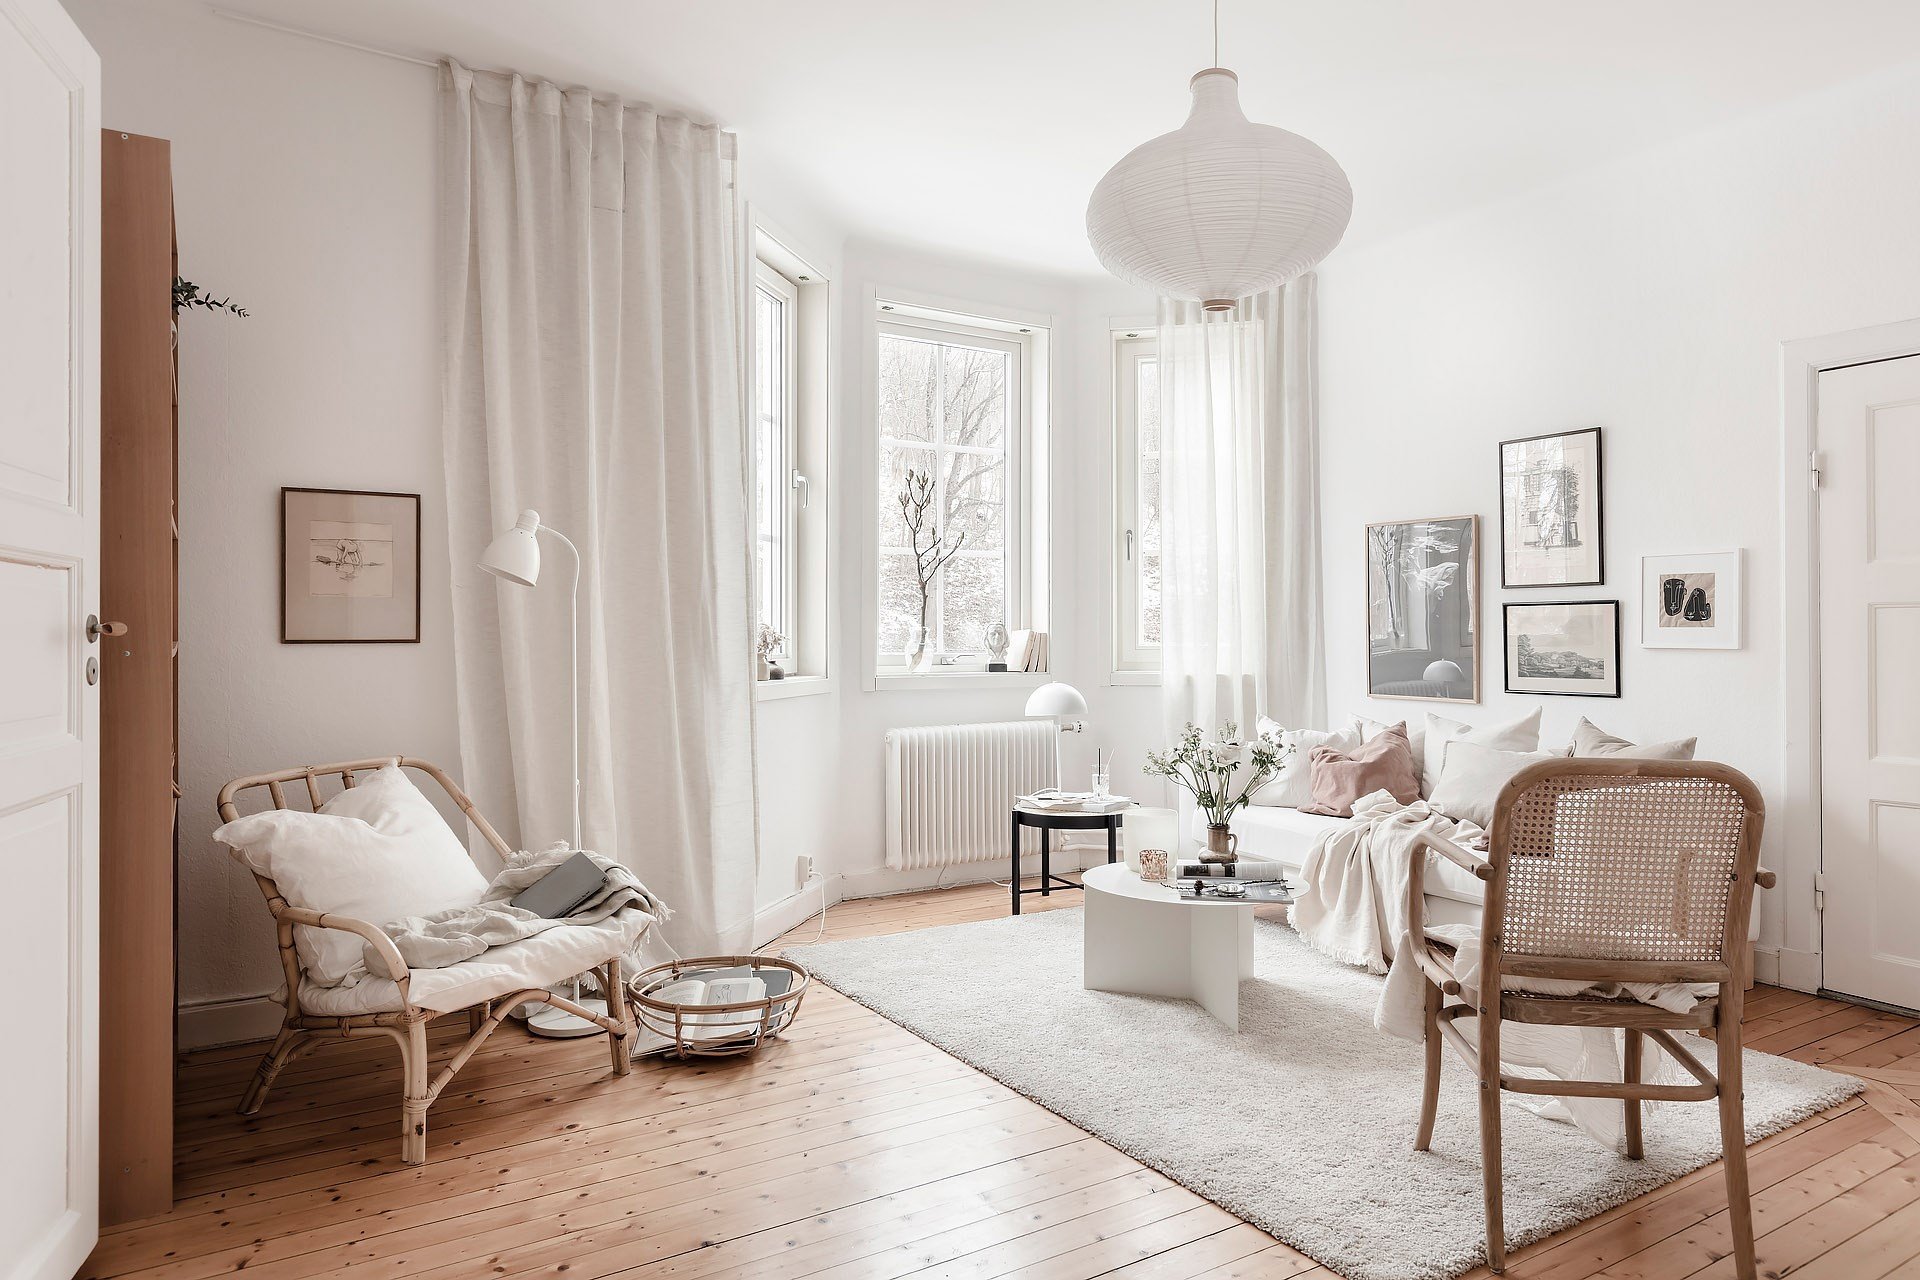 mini-piso-en-suecia-con-decoracion-moderna-nordica-salon-con-lampara-de-techo 174a5b31 1920x1280